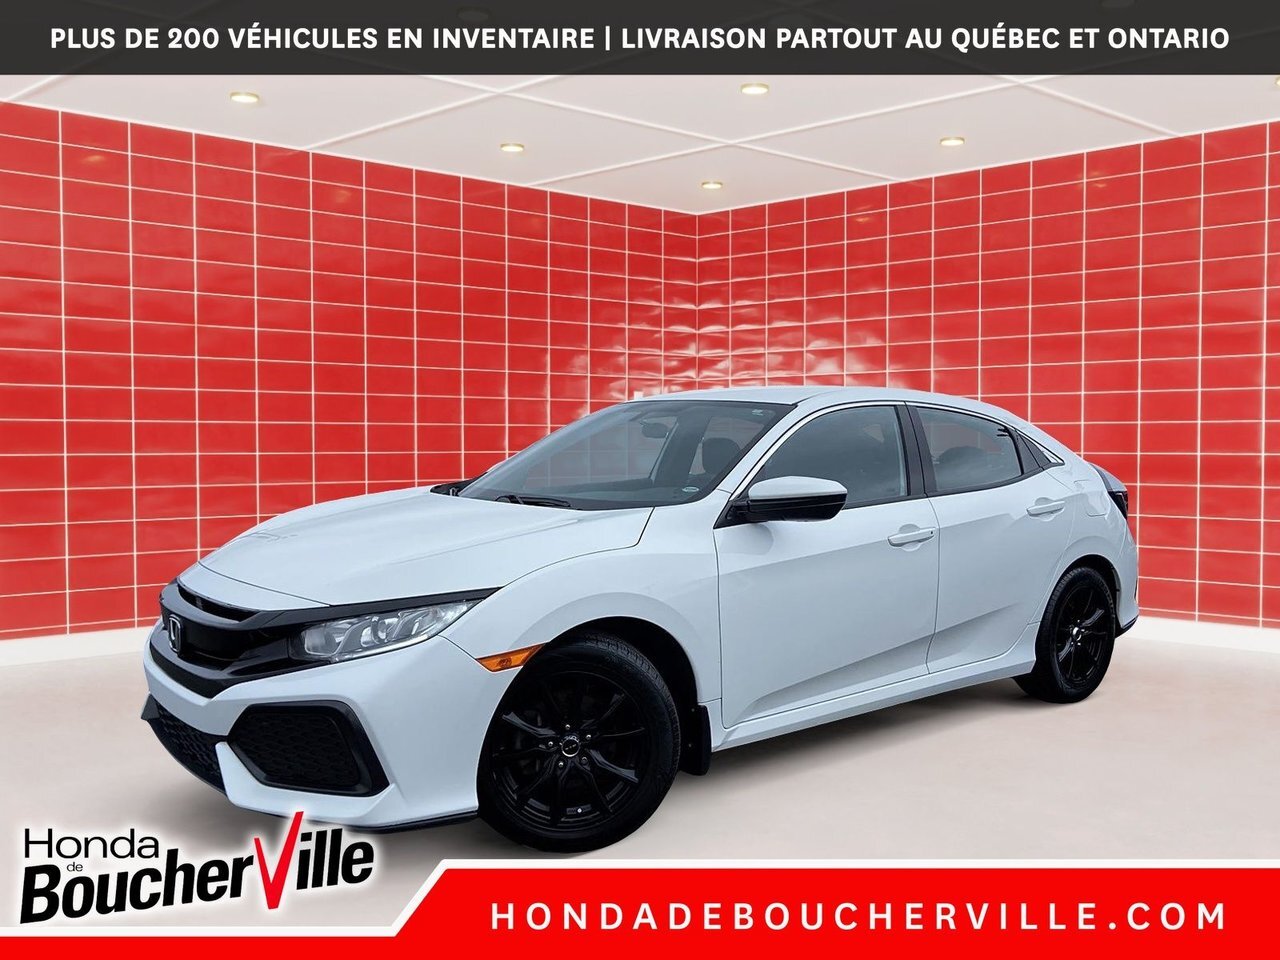 2017 Honda Civic Hatchback LX AUTOMATIQUE, TURBO, BAS KILOMETRAGE